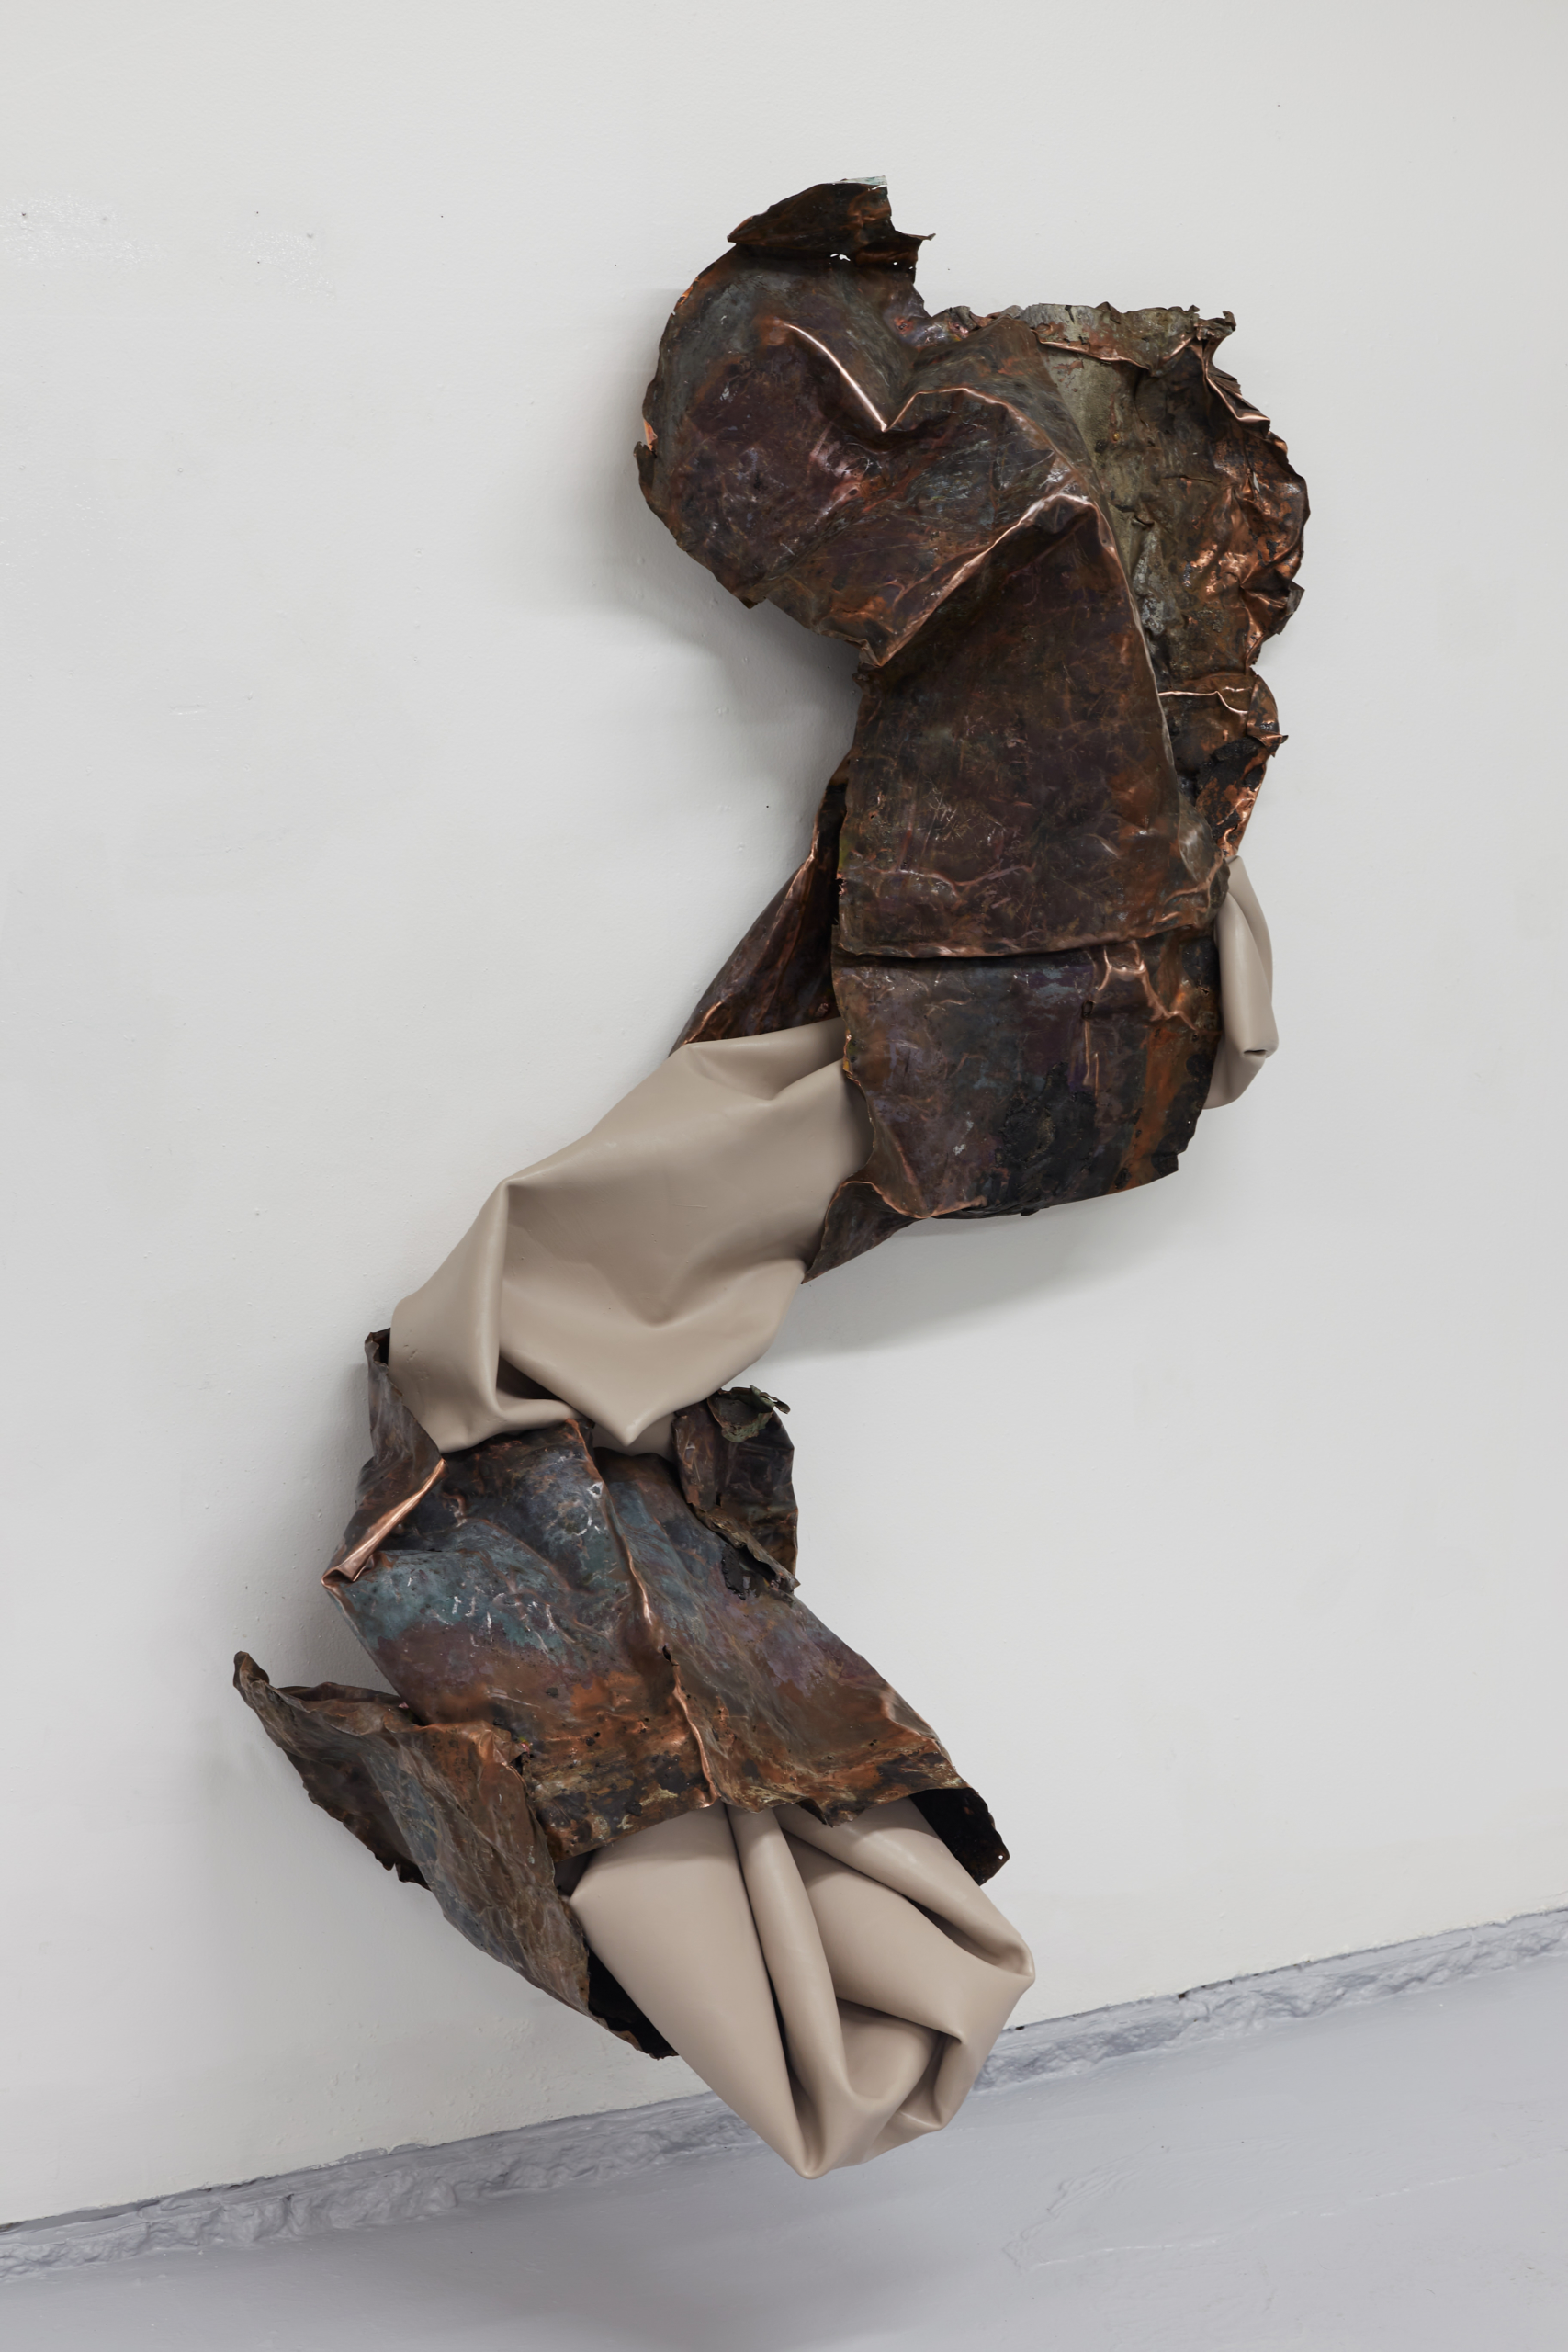 Kennedy Yanko's Abstract Metal Sculptures Take Milan — ART SHE SAYS